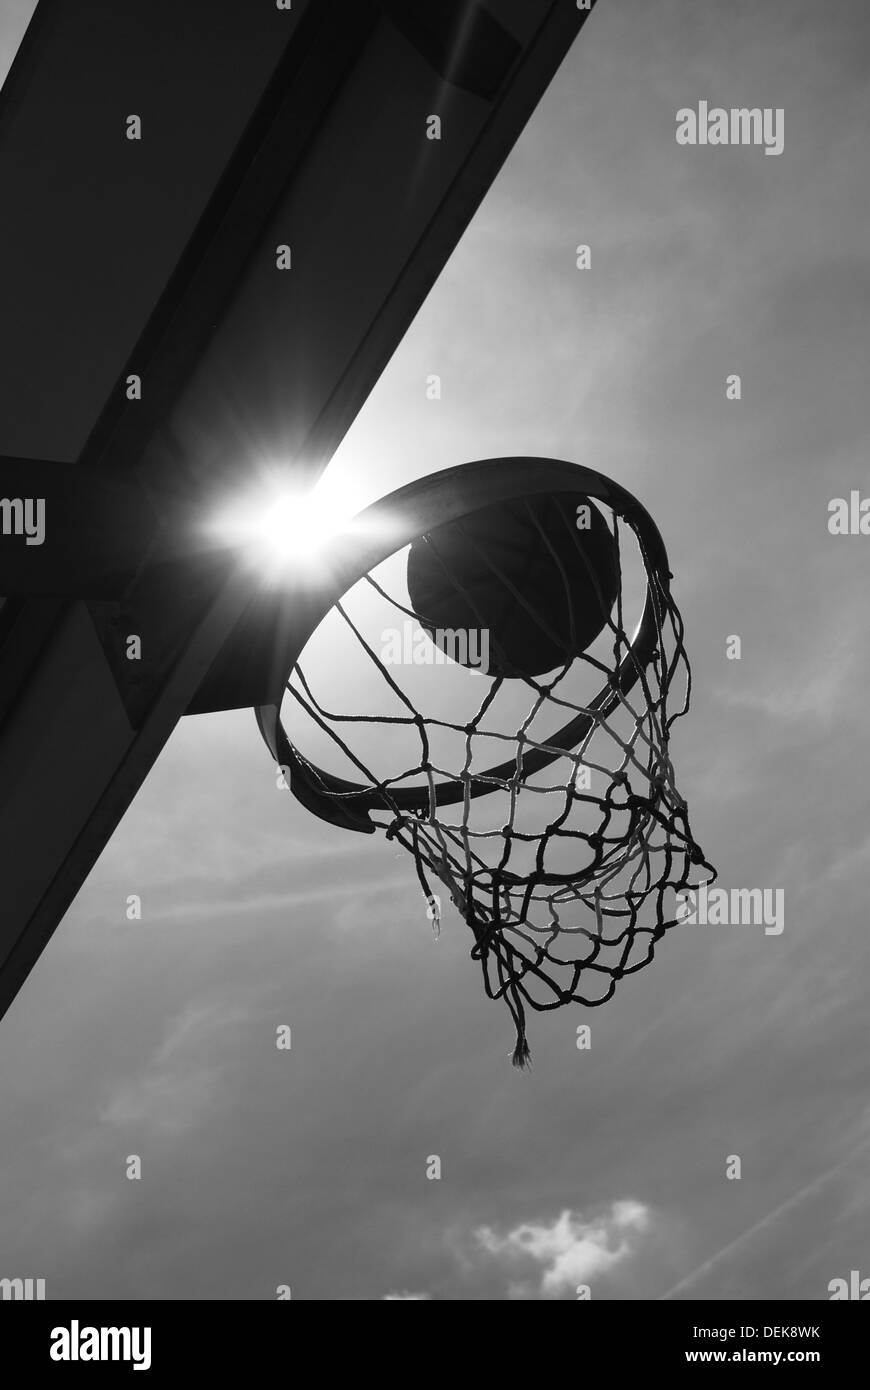 Ball falls in basket Stock Photo - Alamy